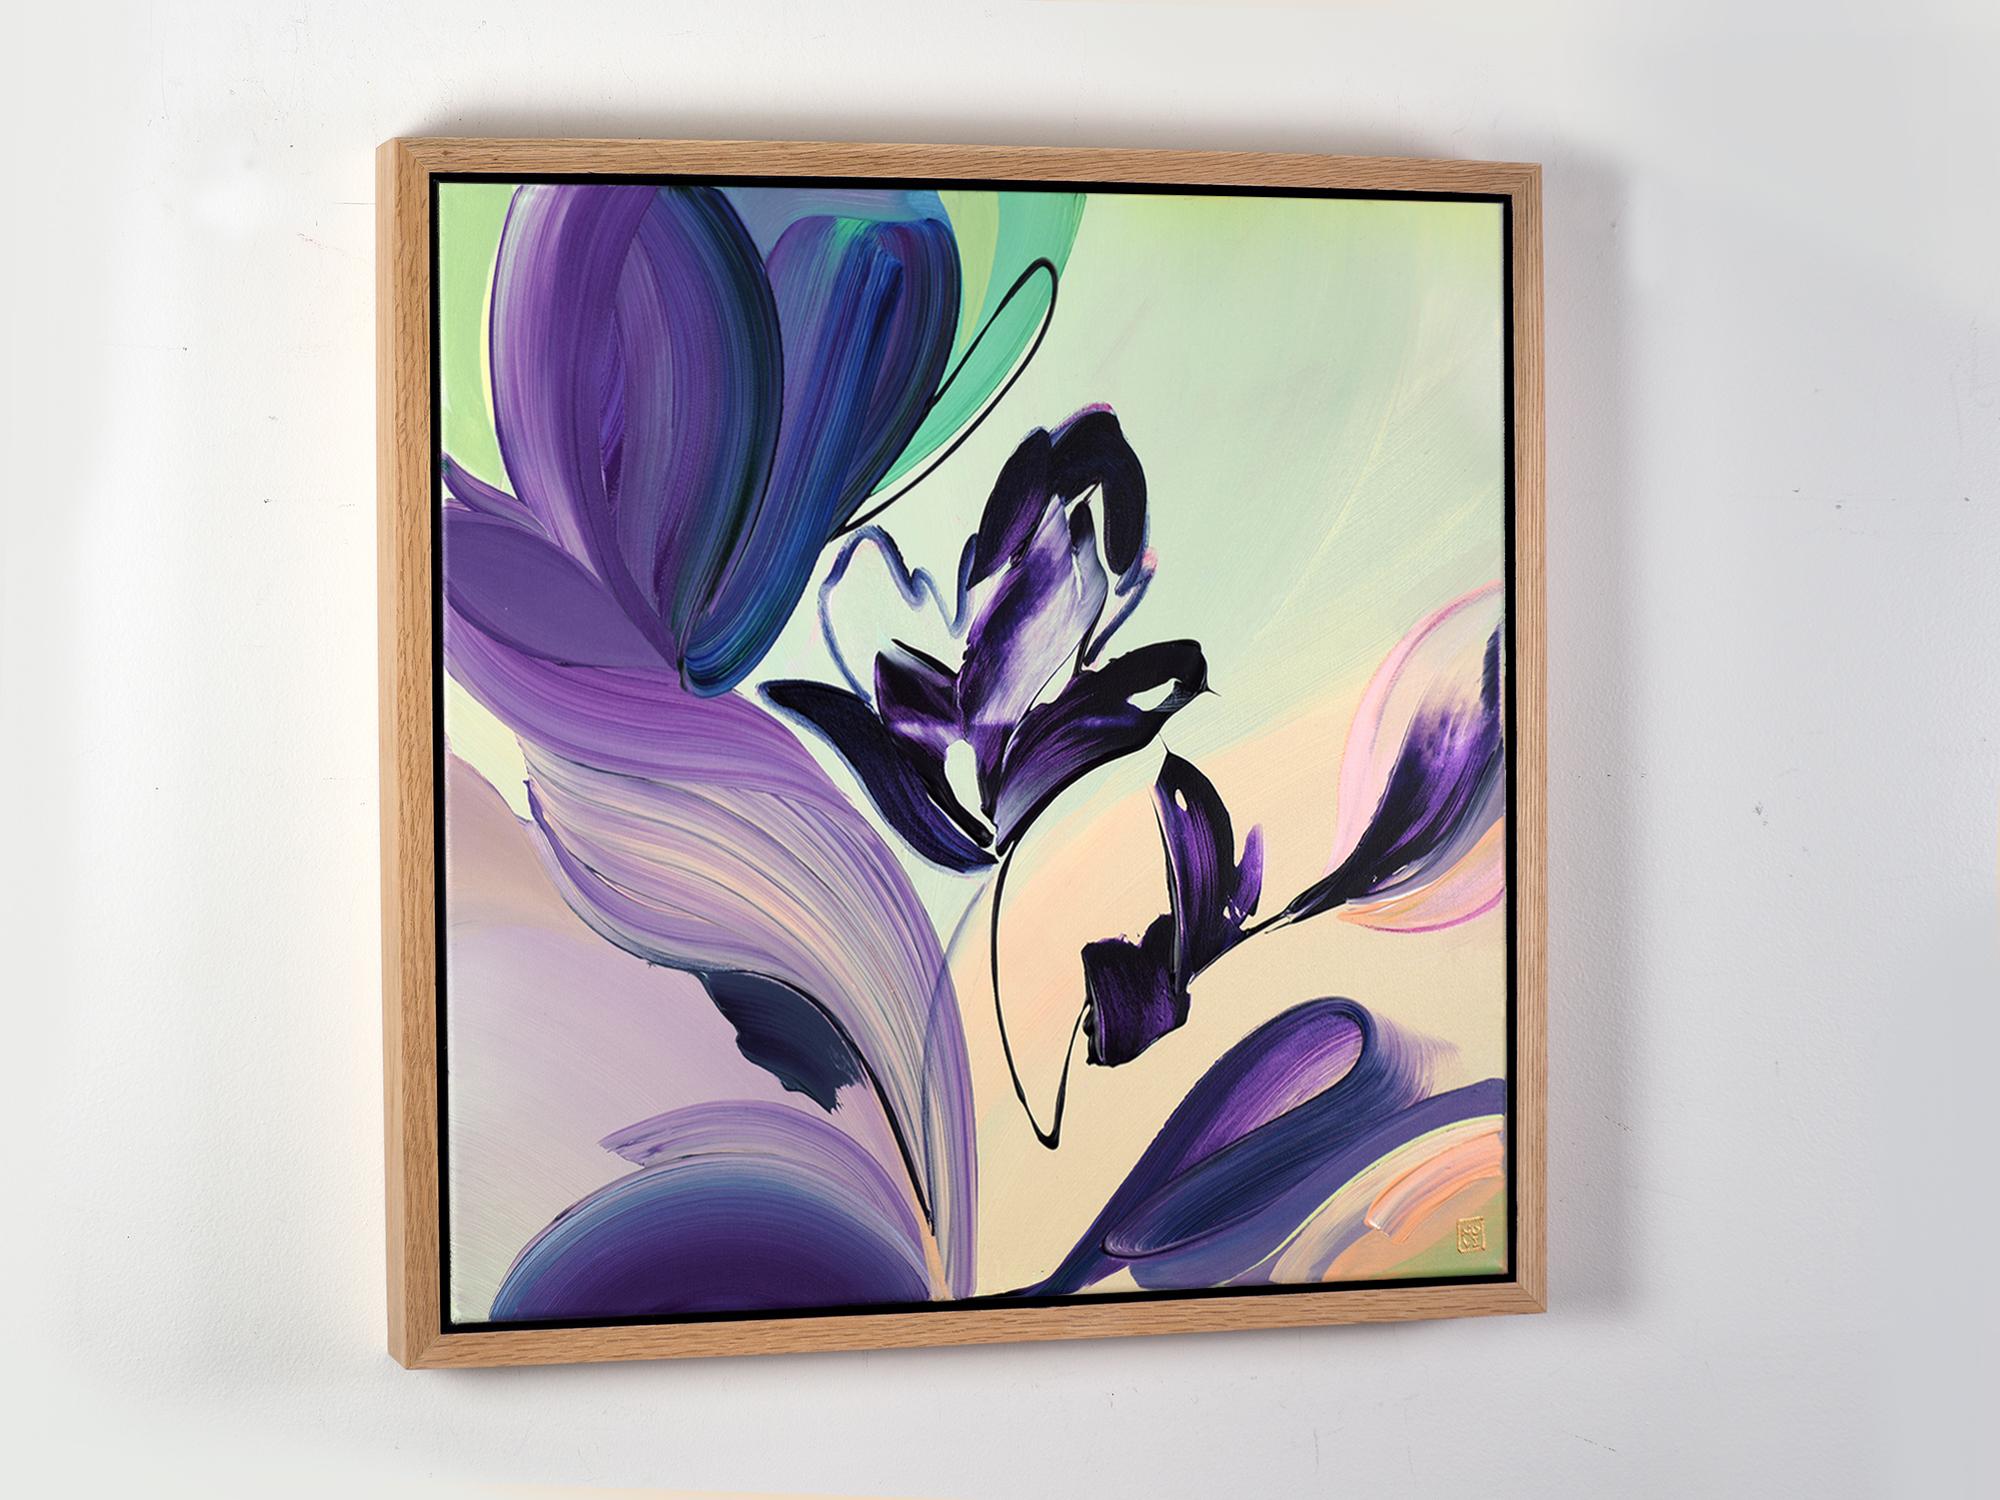 Lavish Violets, Original Framed Contemporary Abstract Painting, 2022
30